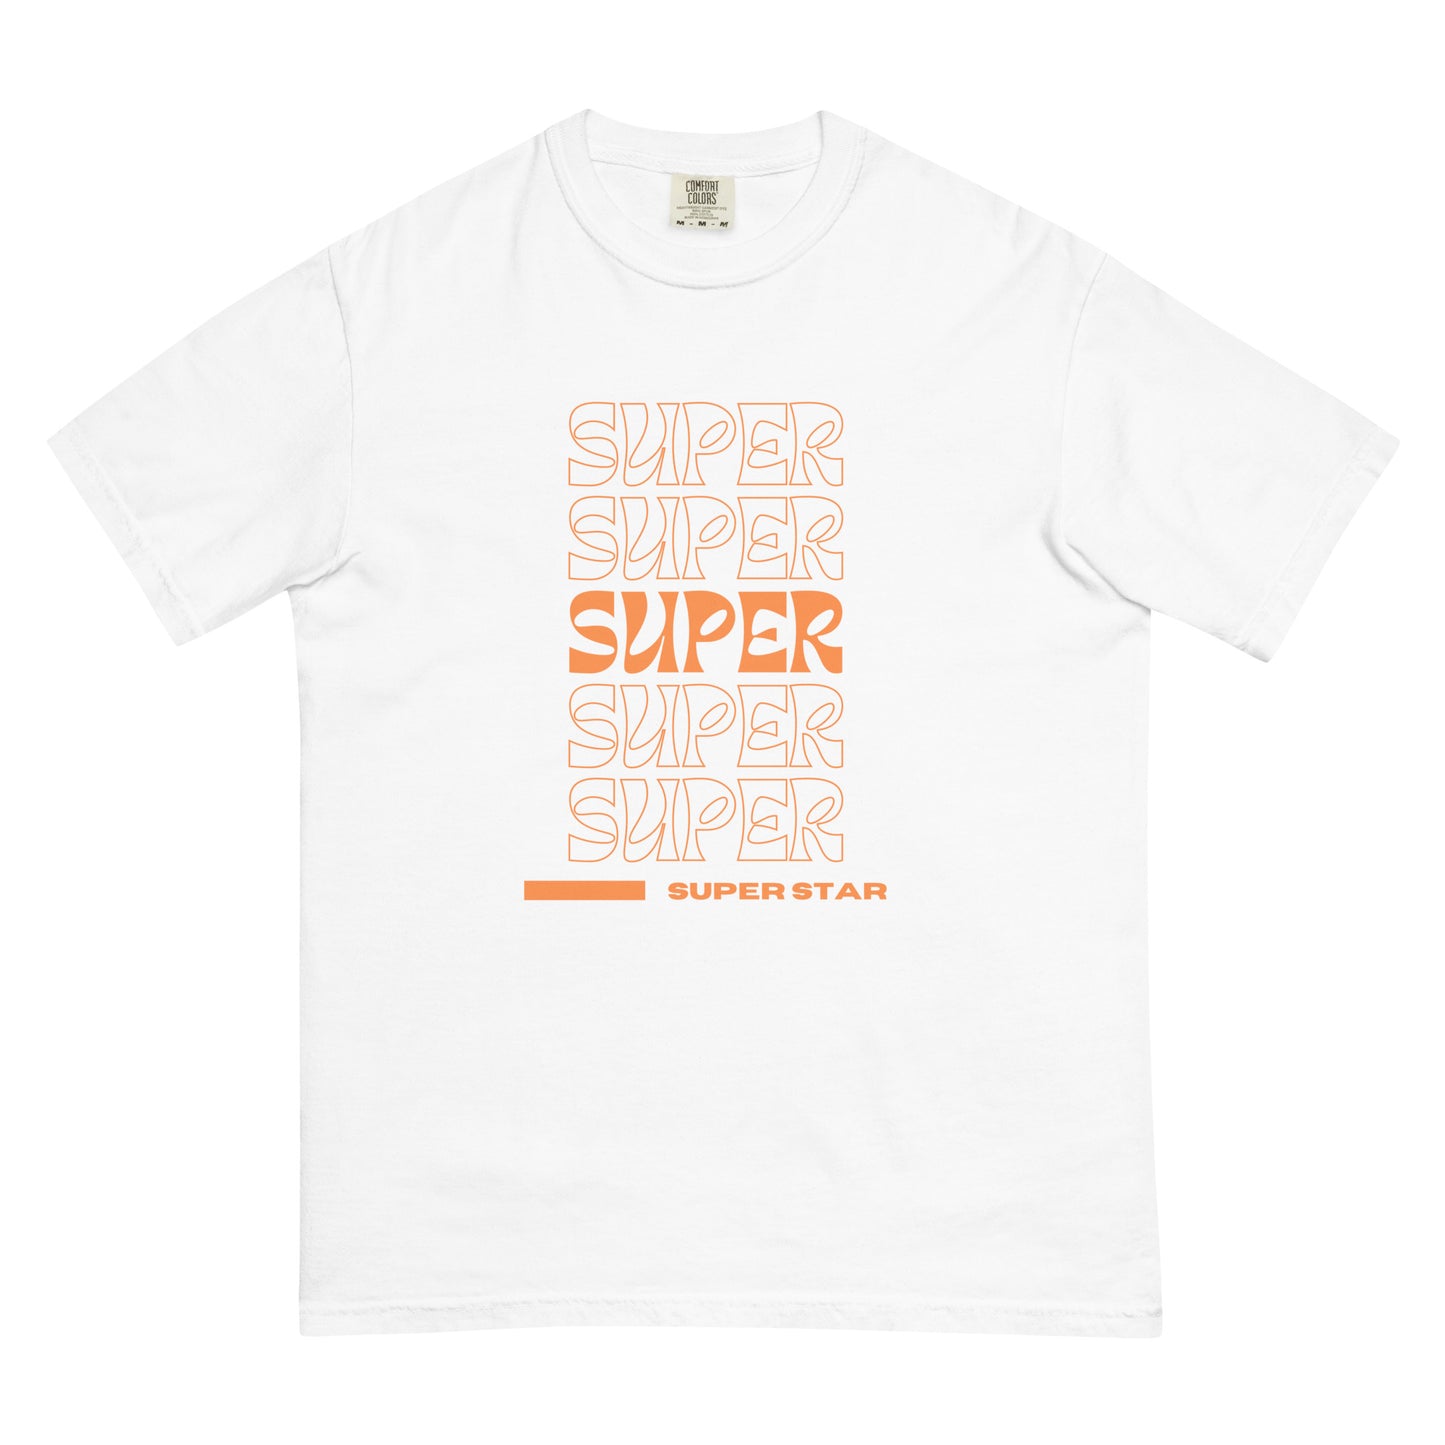 Super Super Super Star Tee